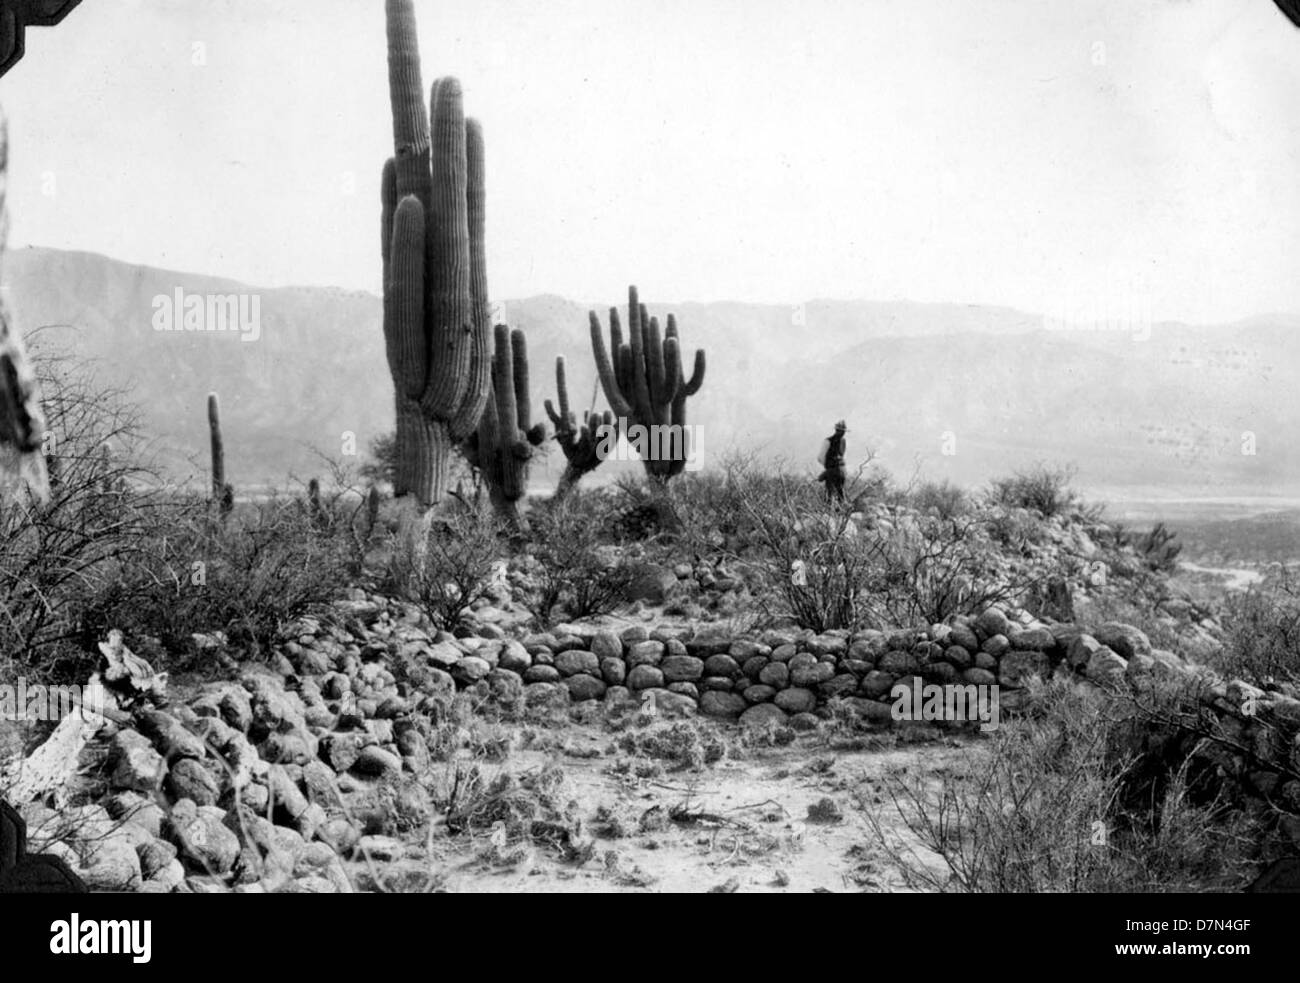 Man standing next to cactus Stock Photo